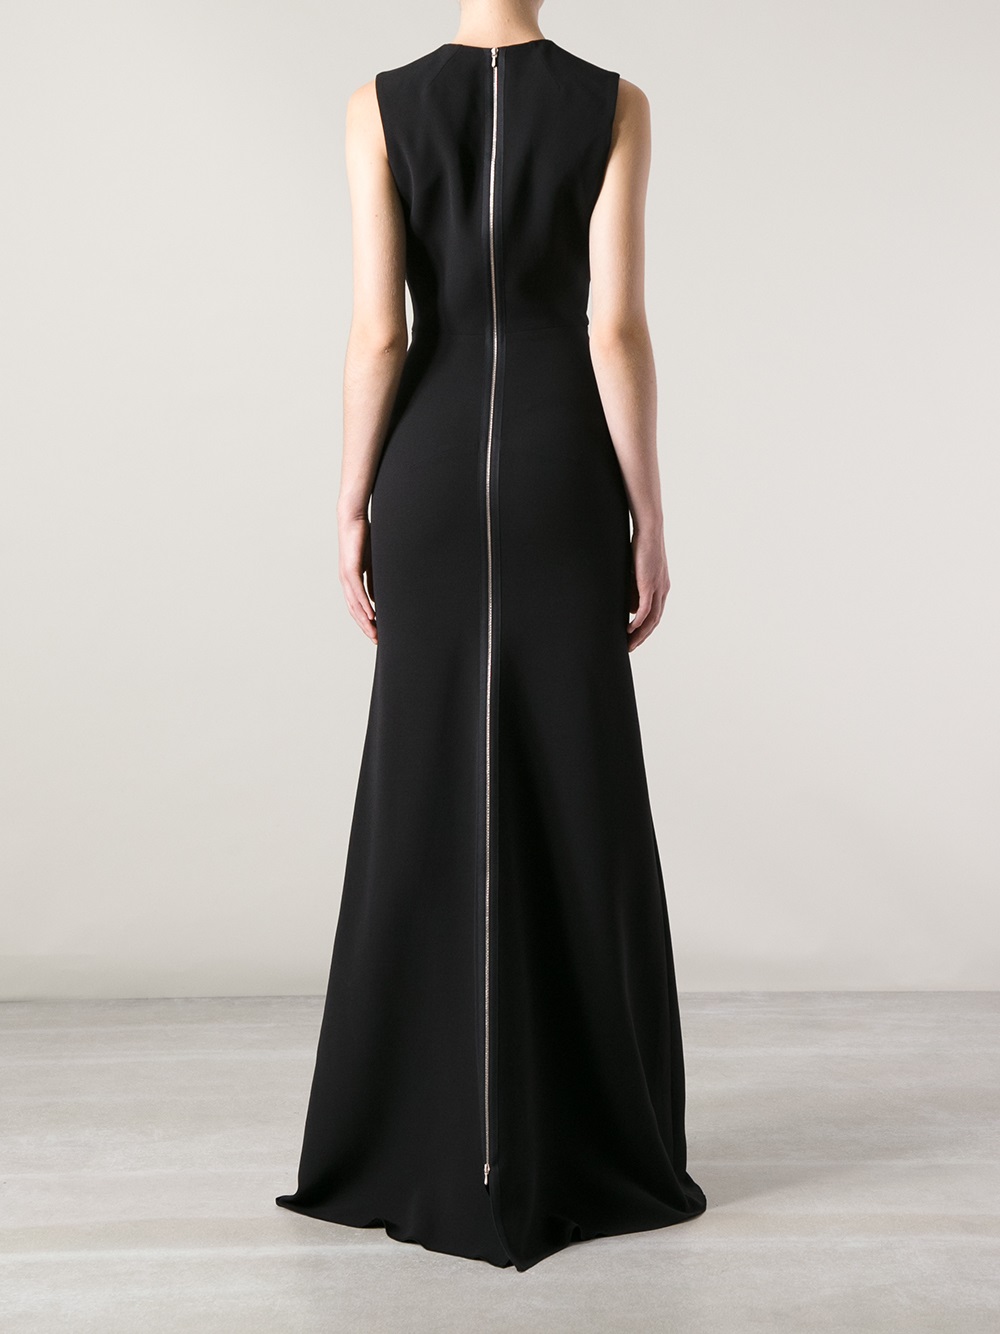 Lyst - Victoria Beckham Contrast Panel Floor Length Gown in Black